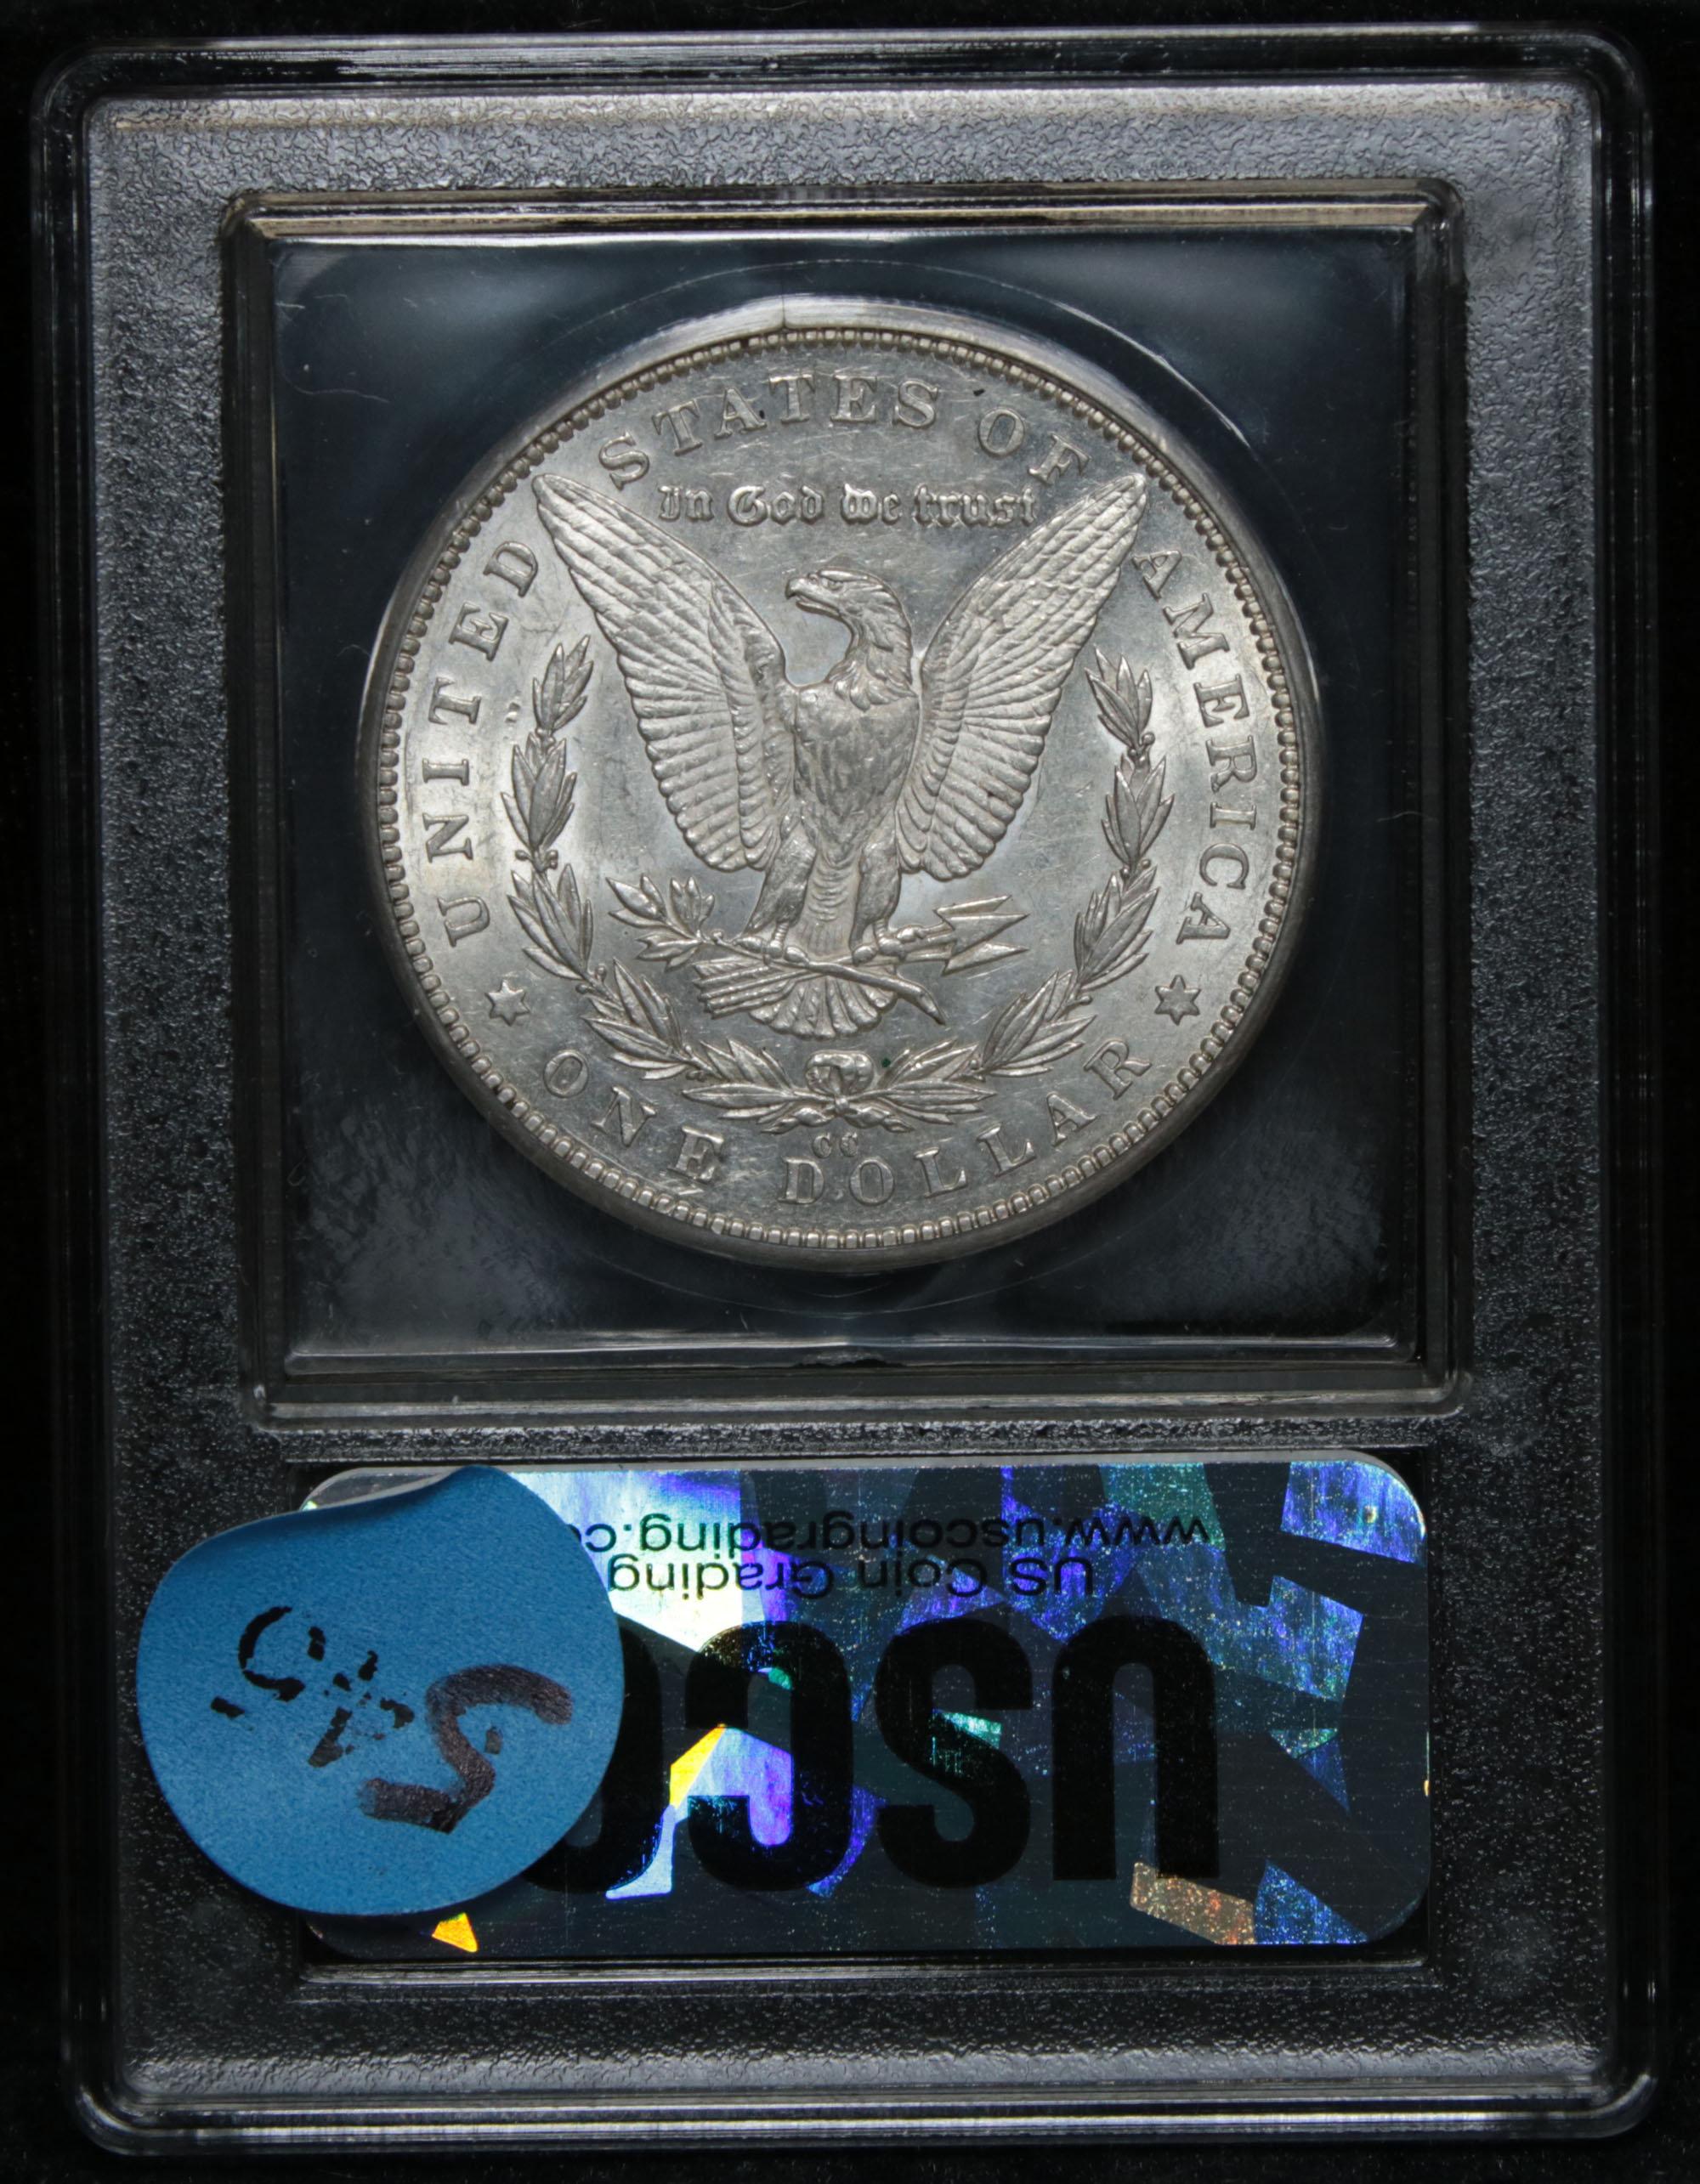 ***Auction Highlight*** 1892-cc Morgan Dollar $1 Graded Select Unc by USCG (fc)